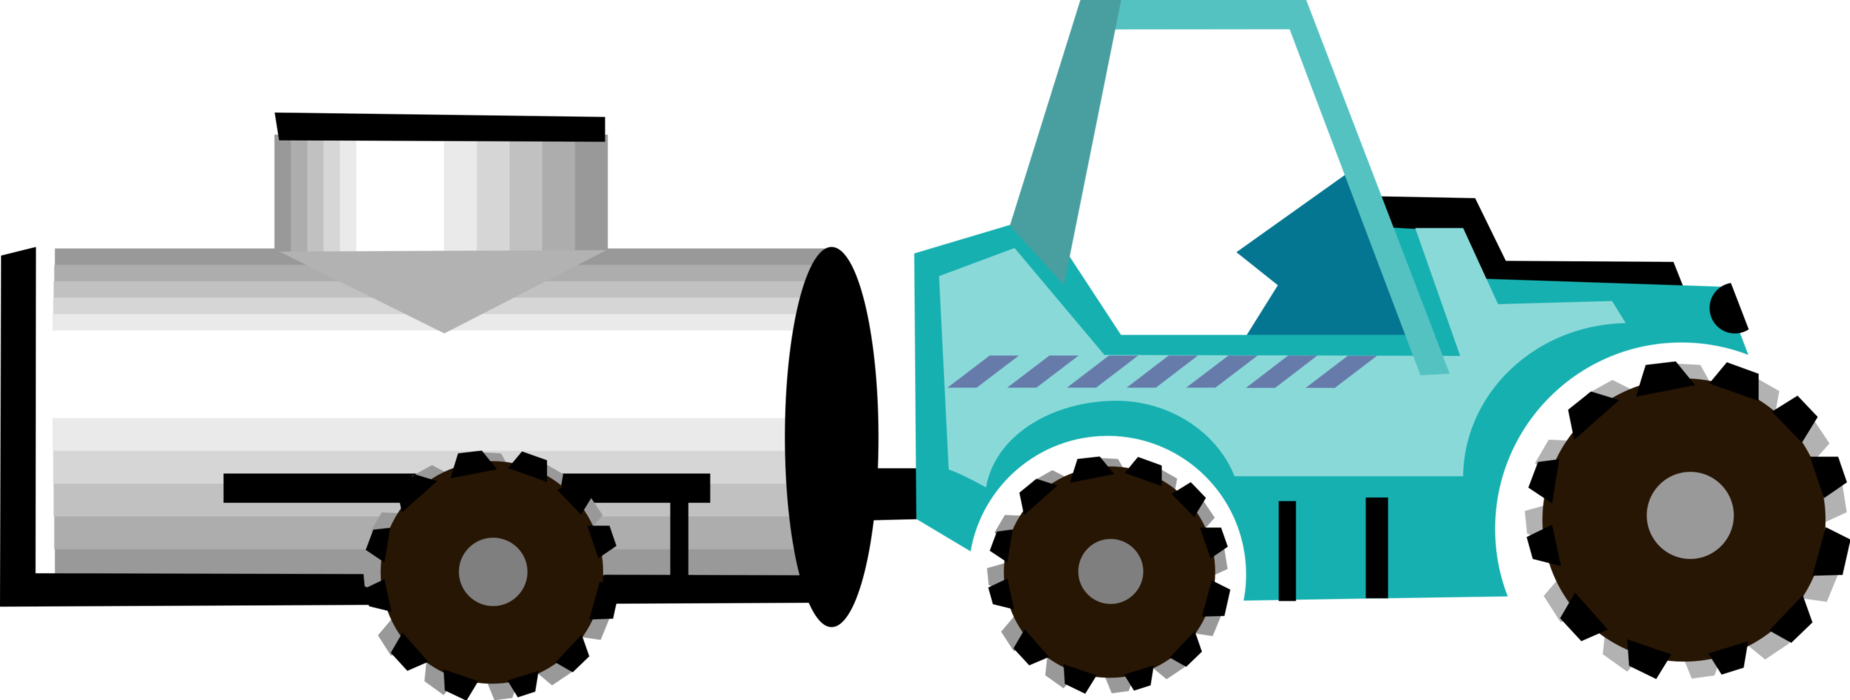 Vector Illustration of Farm Equipment Tractor with Vineyard Wine-Grape Storage Tank